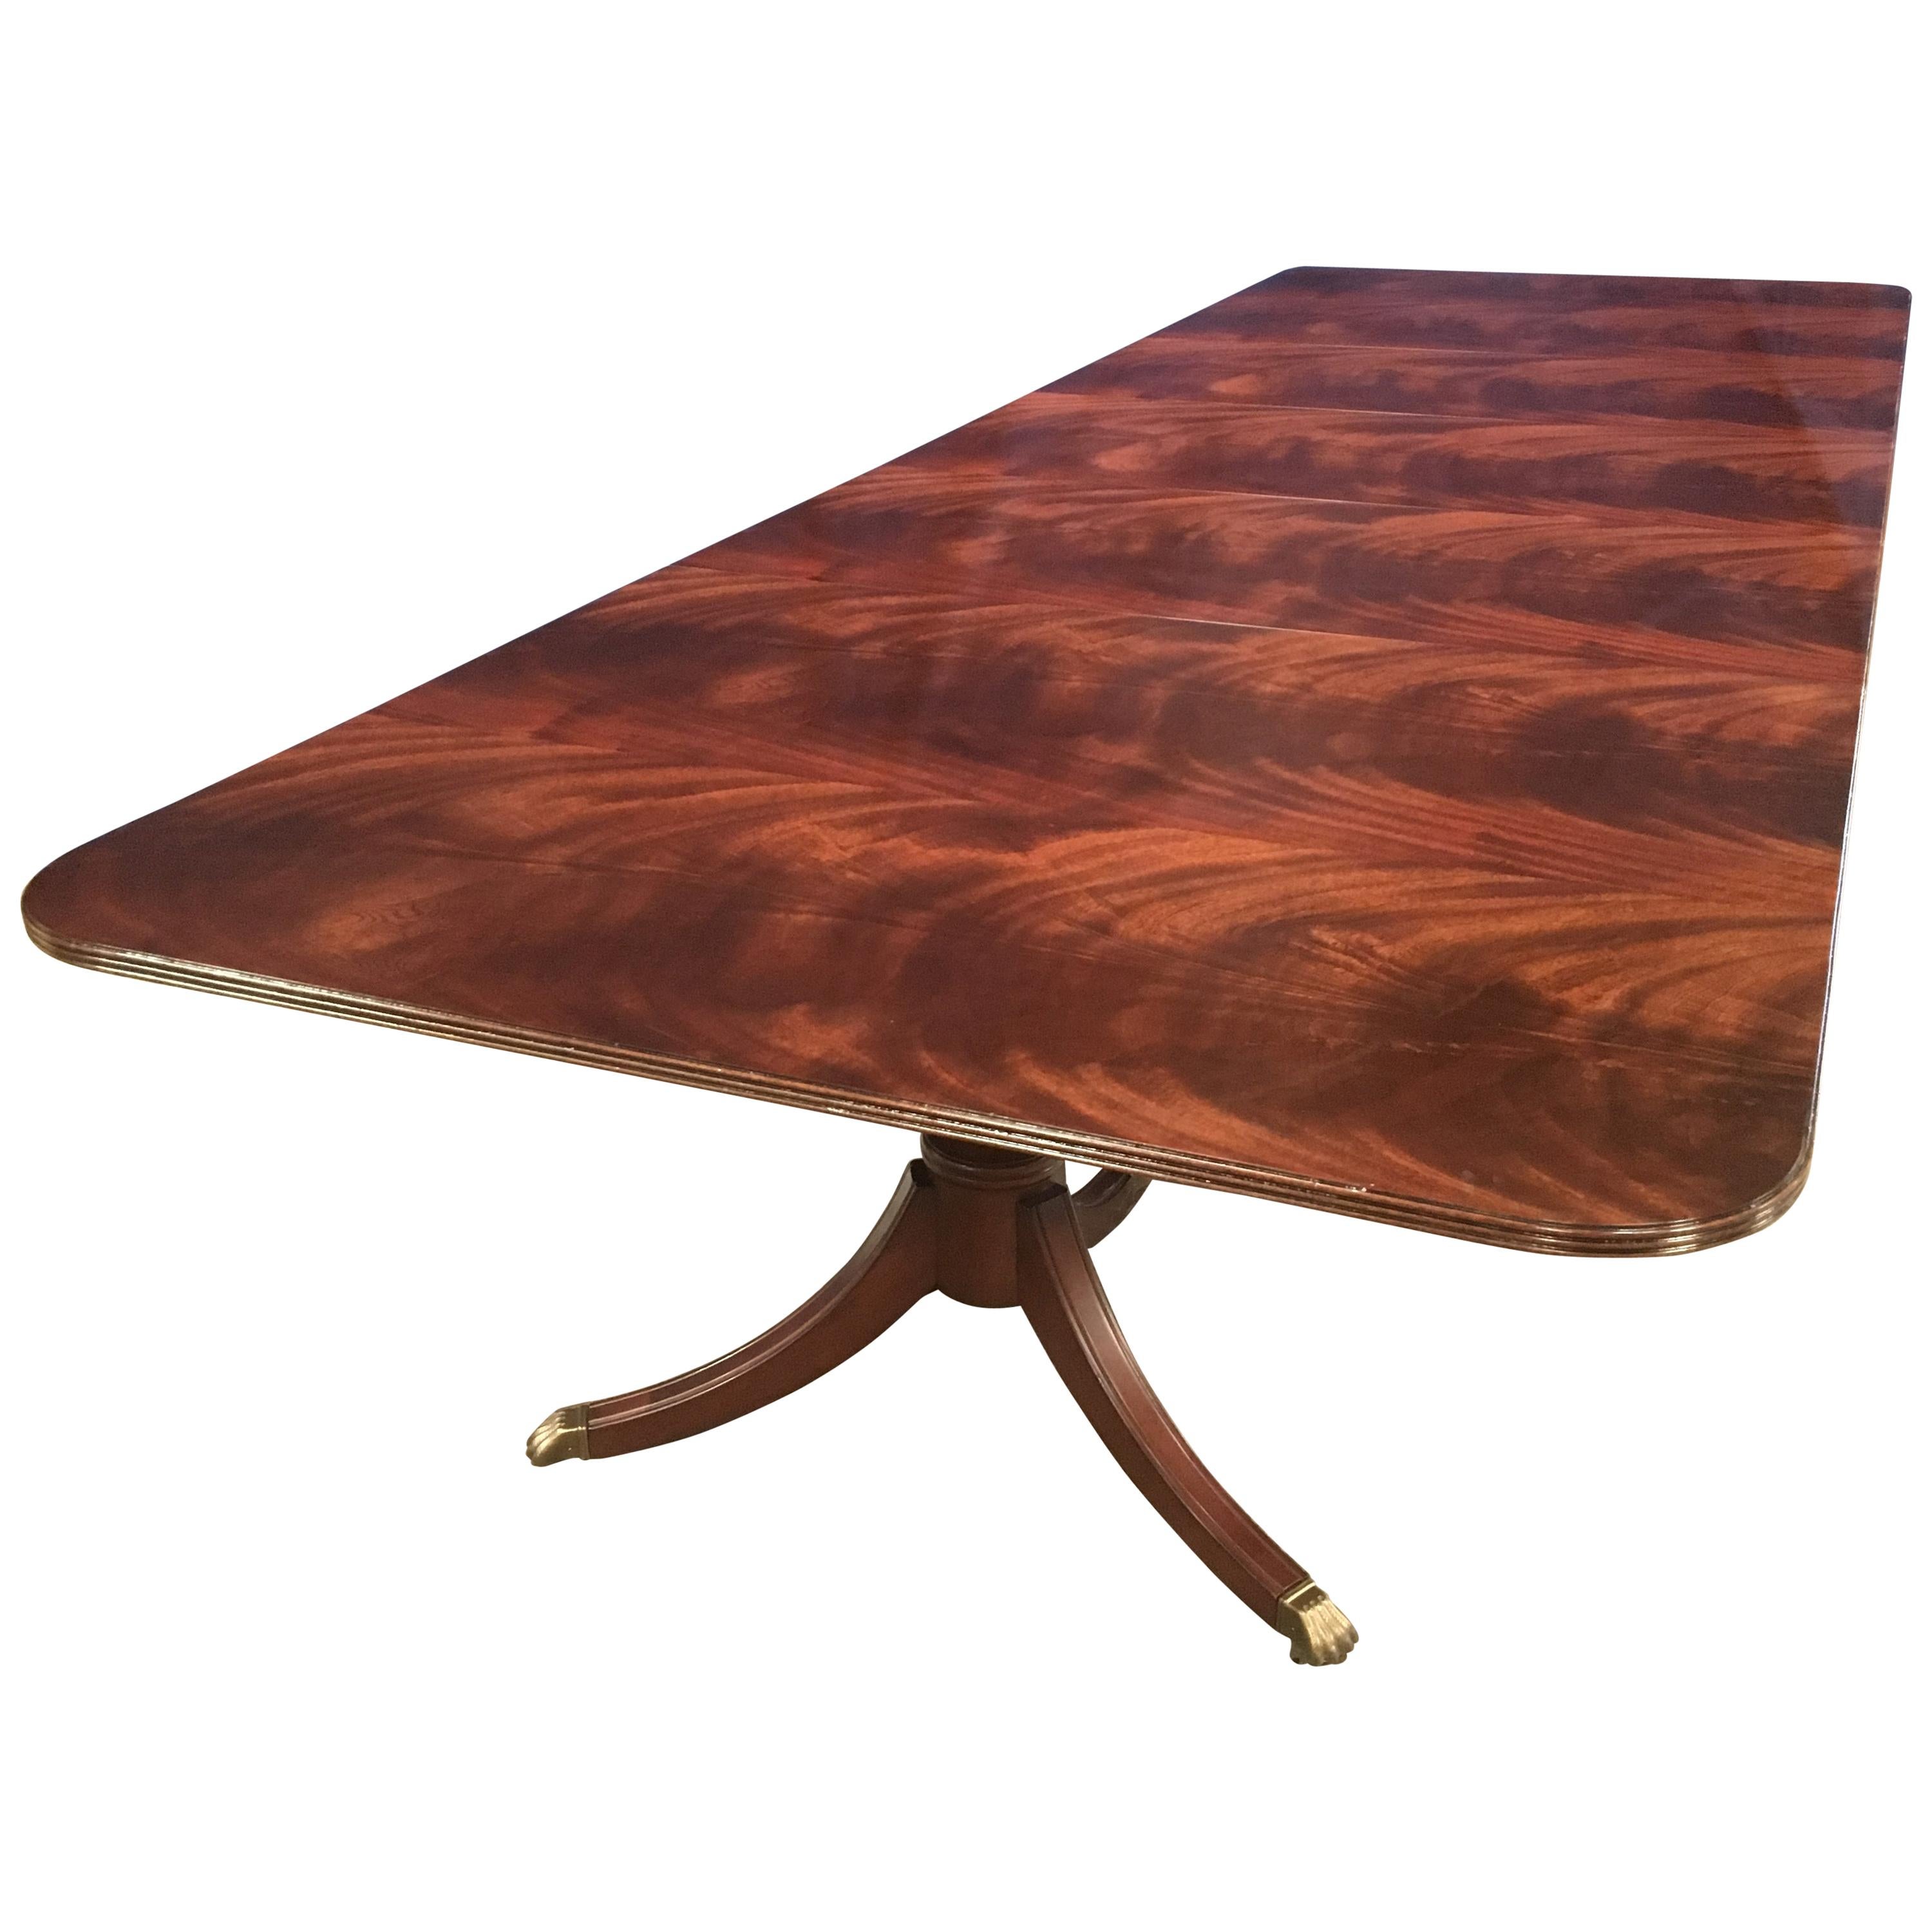 https://a.1stdibscdn.com/custom-large-crotch-mahogany-georgian-style-dining-table-by-leighton-hall-for-sale/1121189/f_152993411562042733109/15299341_master.jpeg